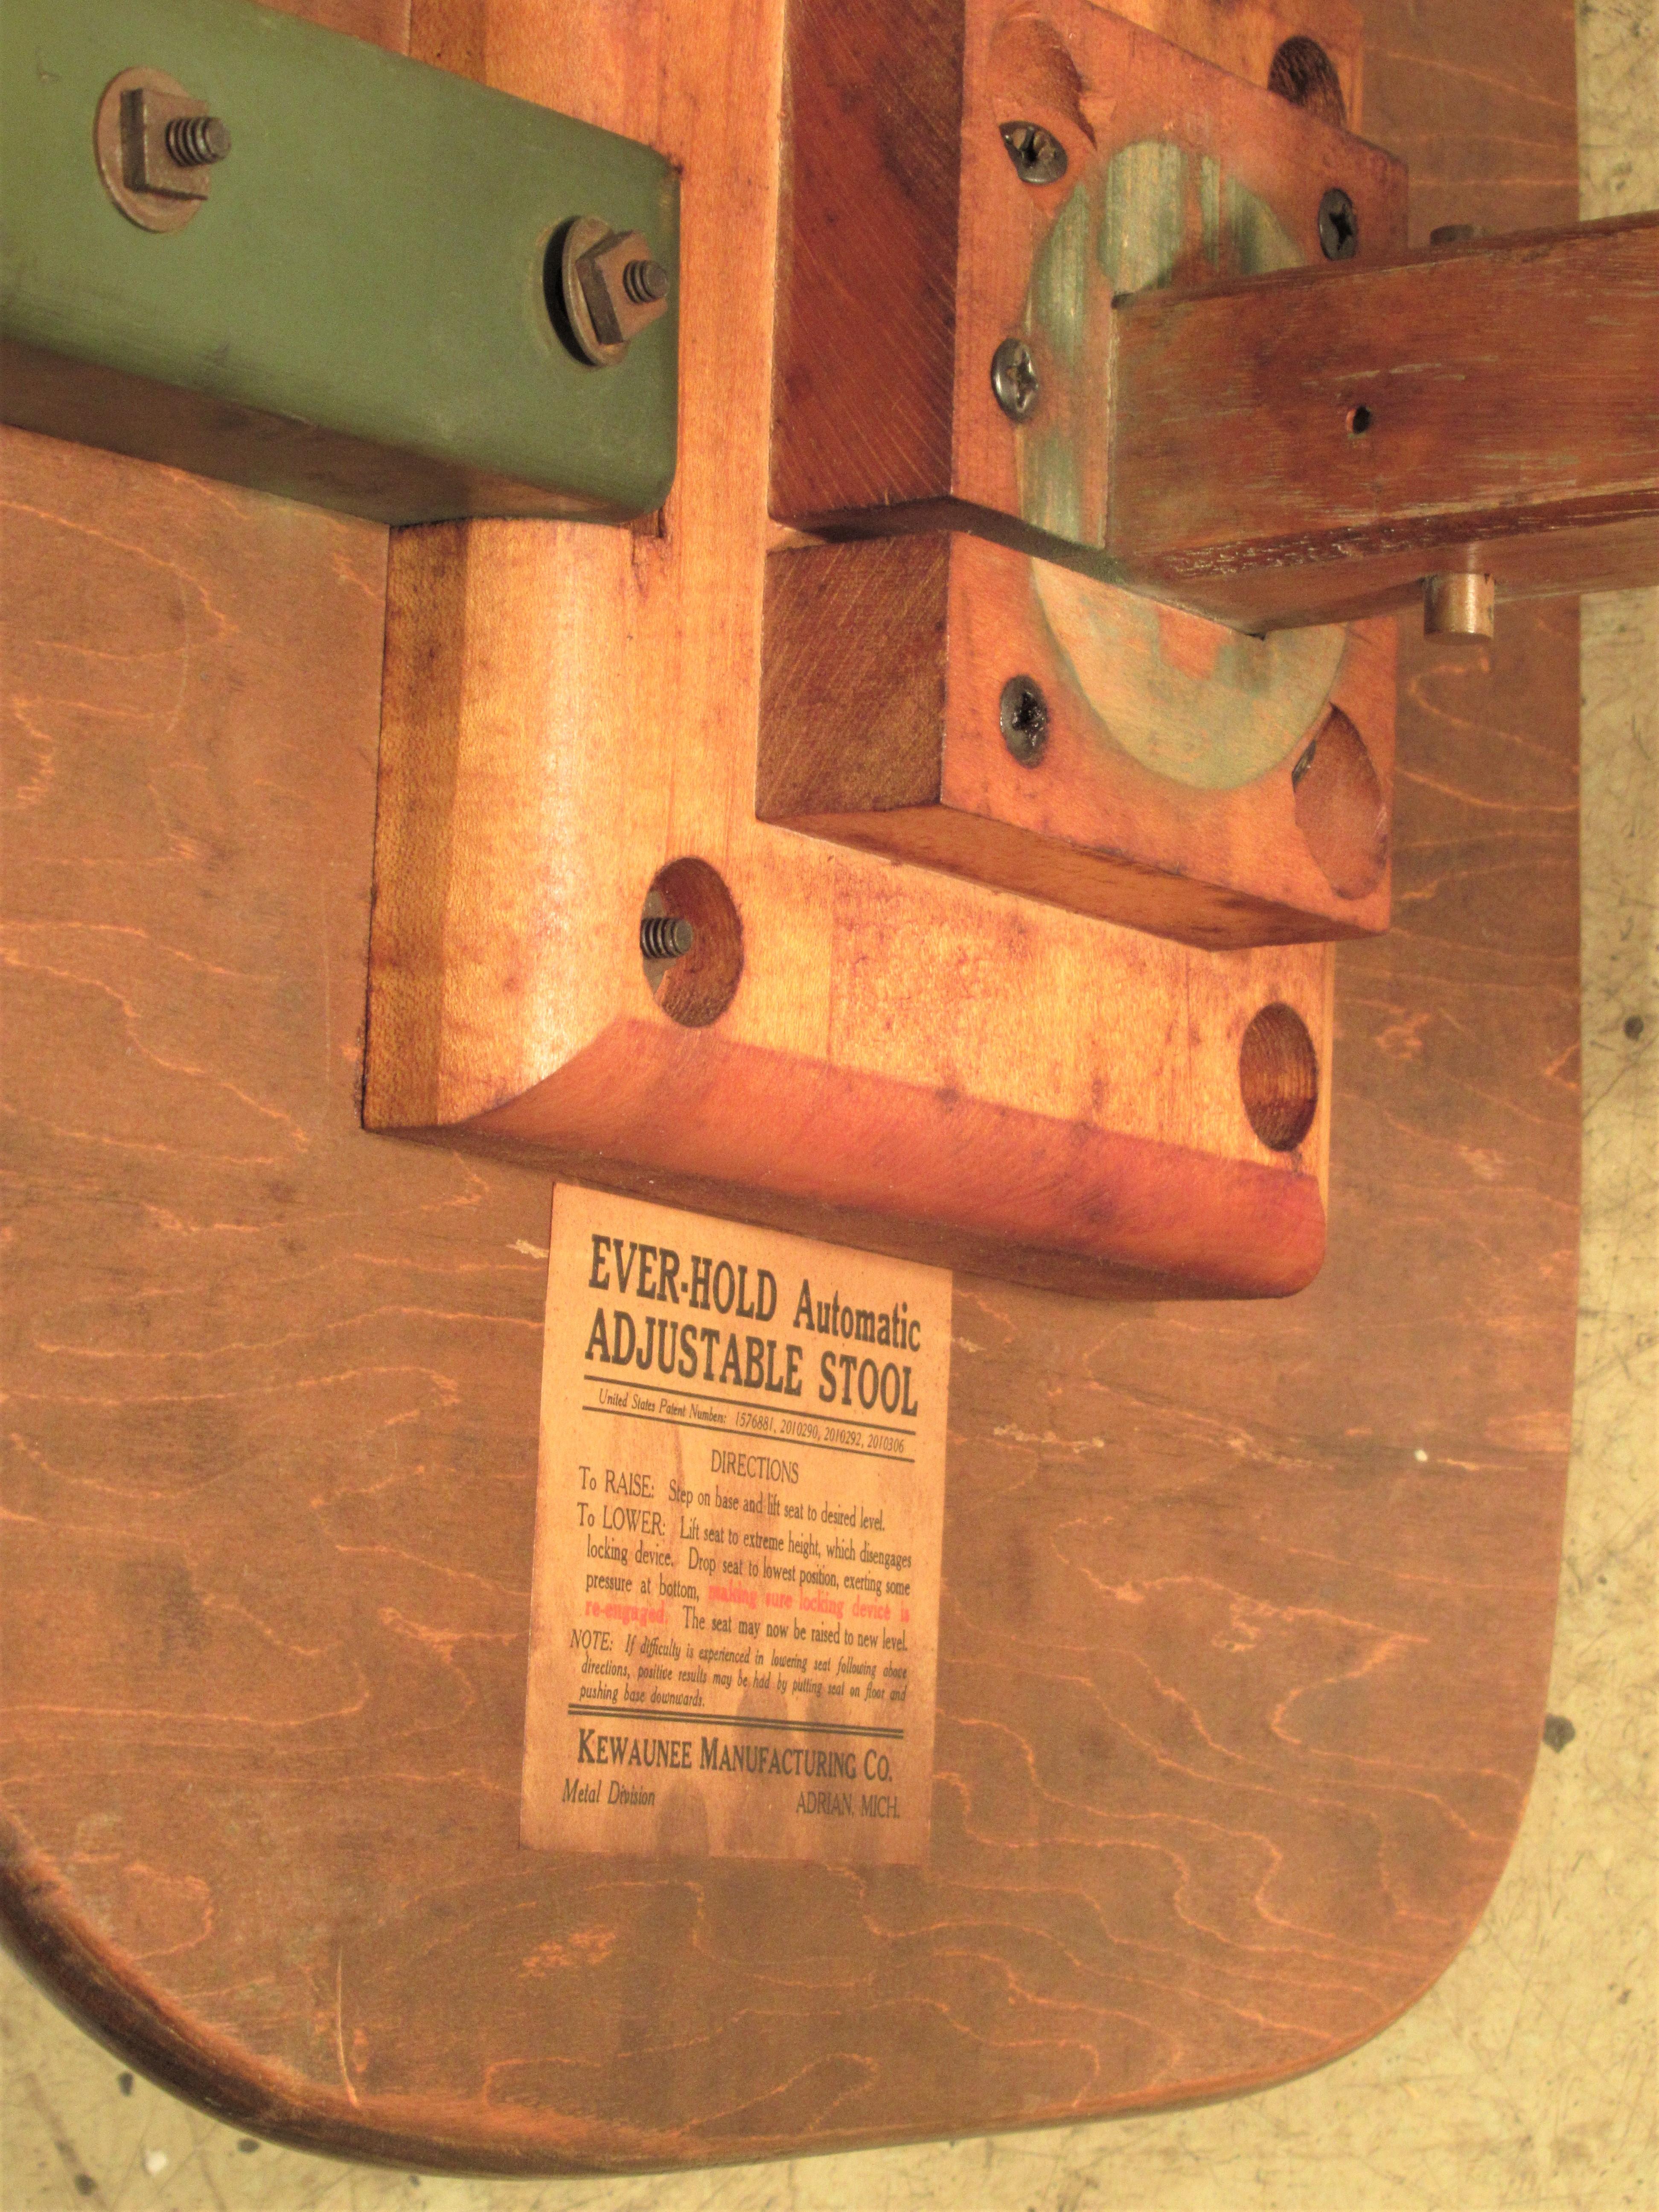 American Industrial Automatic Adjustable Stool circa 1930 - 1940 12